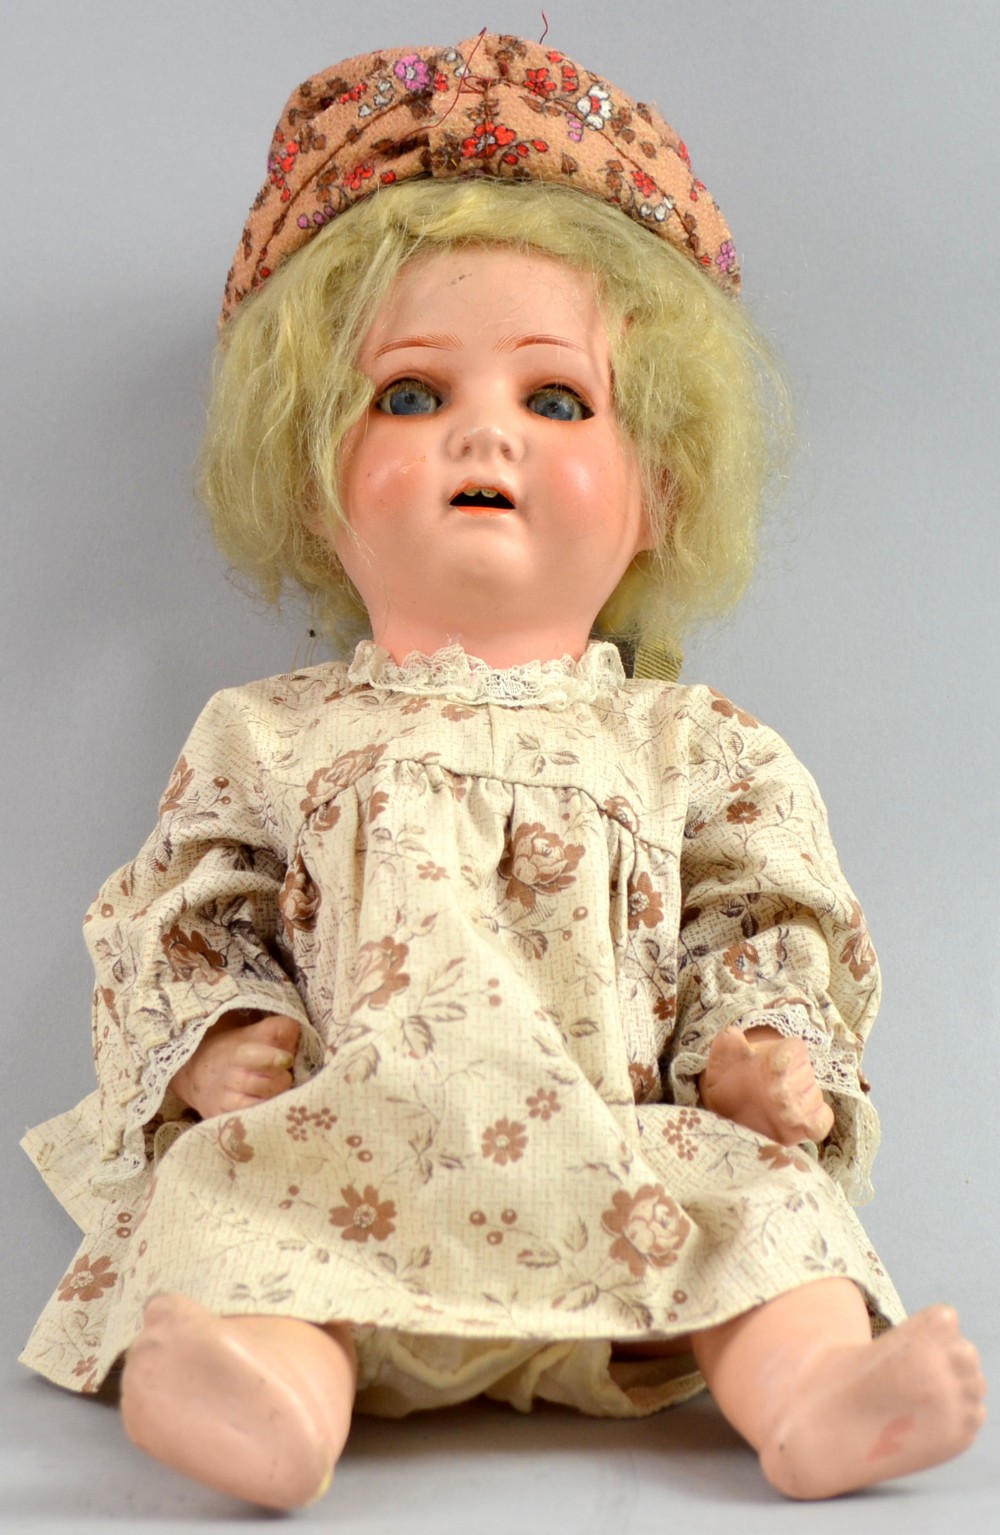 Heubach Koppelsdorf German China Doll, marked 320-2/0 Germany